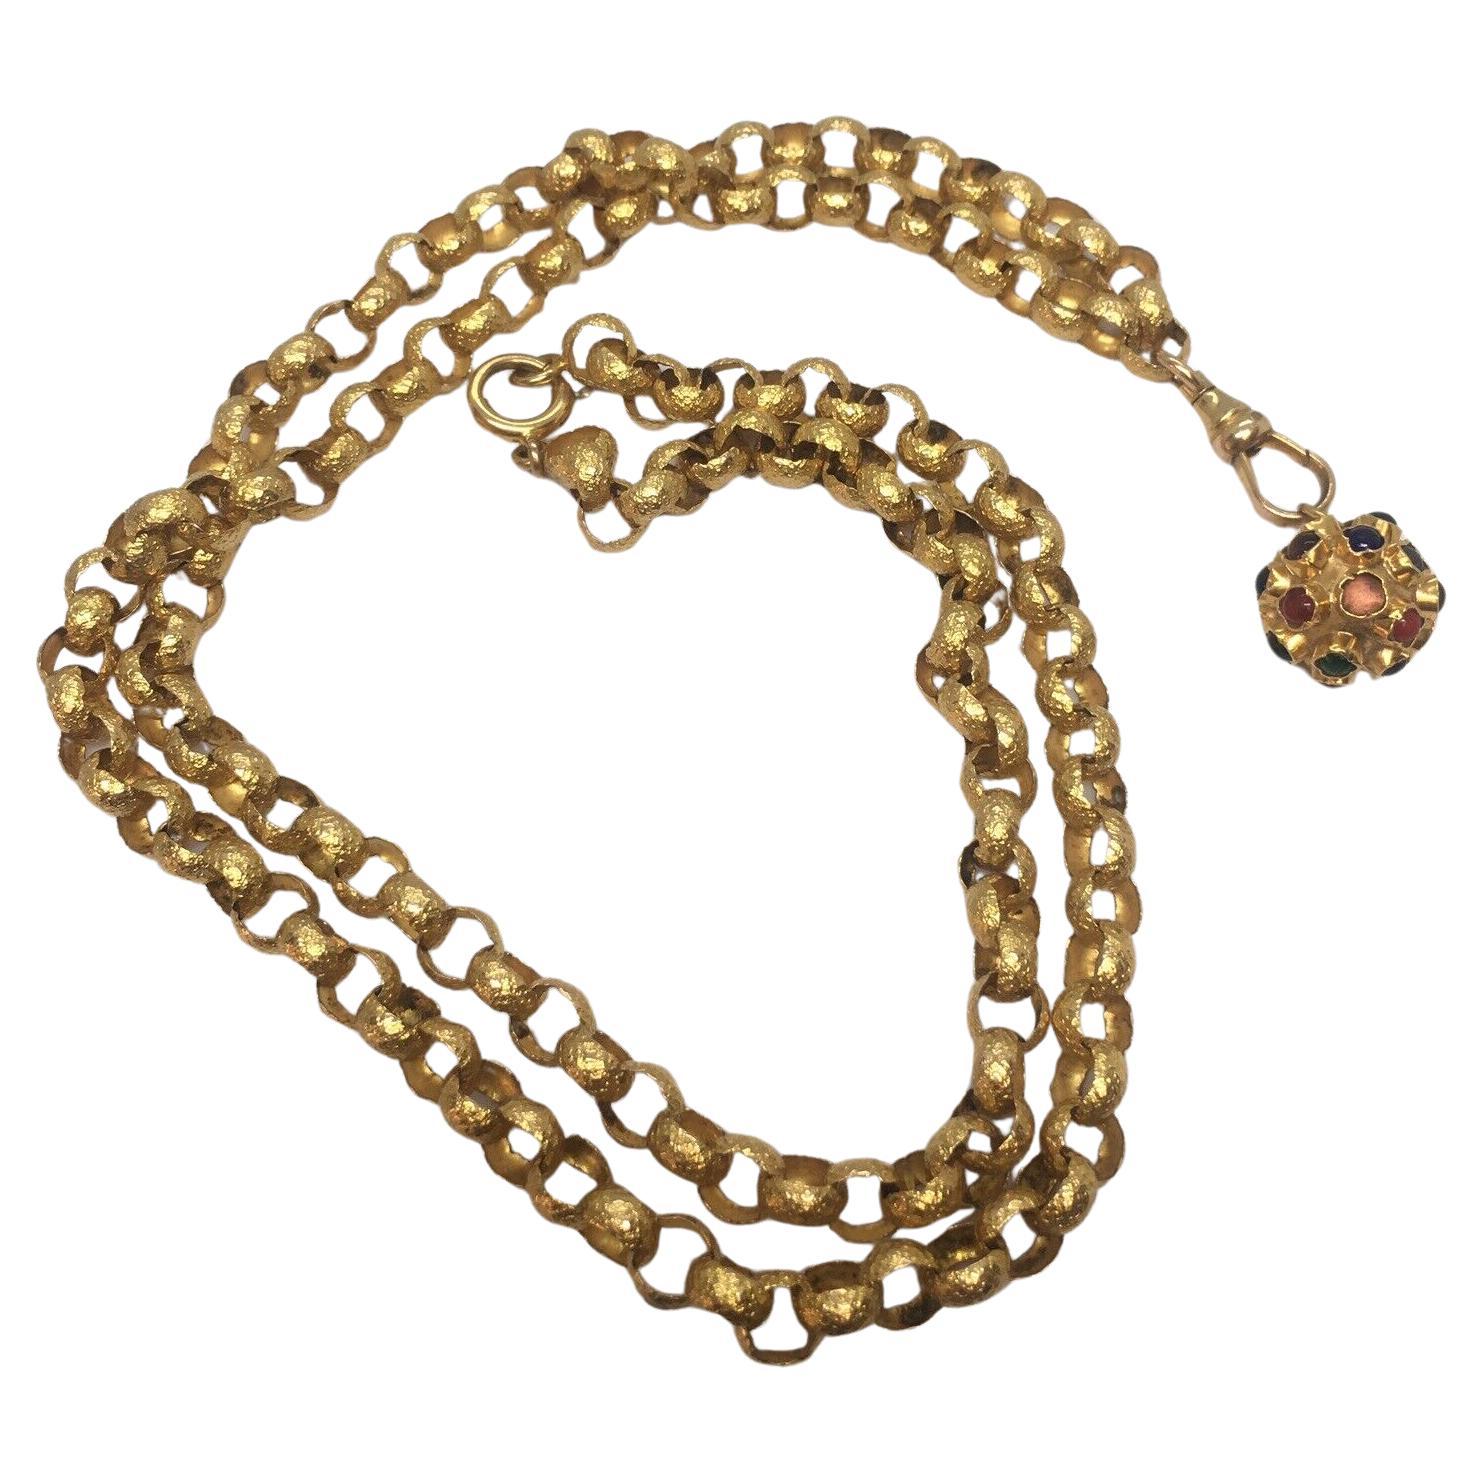 Antique Georgian era 14k Gold Patterned Belcher Chain Necklace 25 inch 23.1 Gram